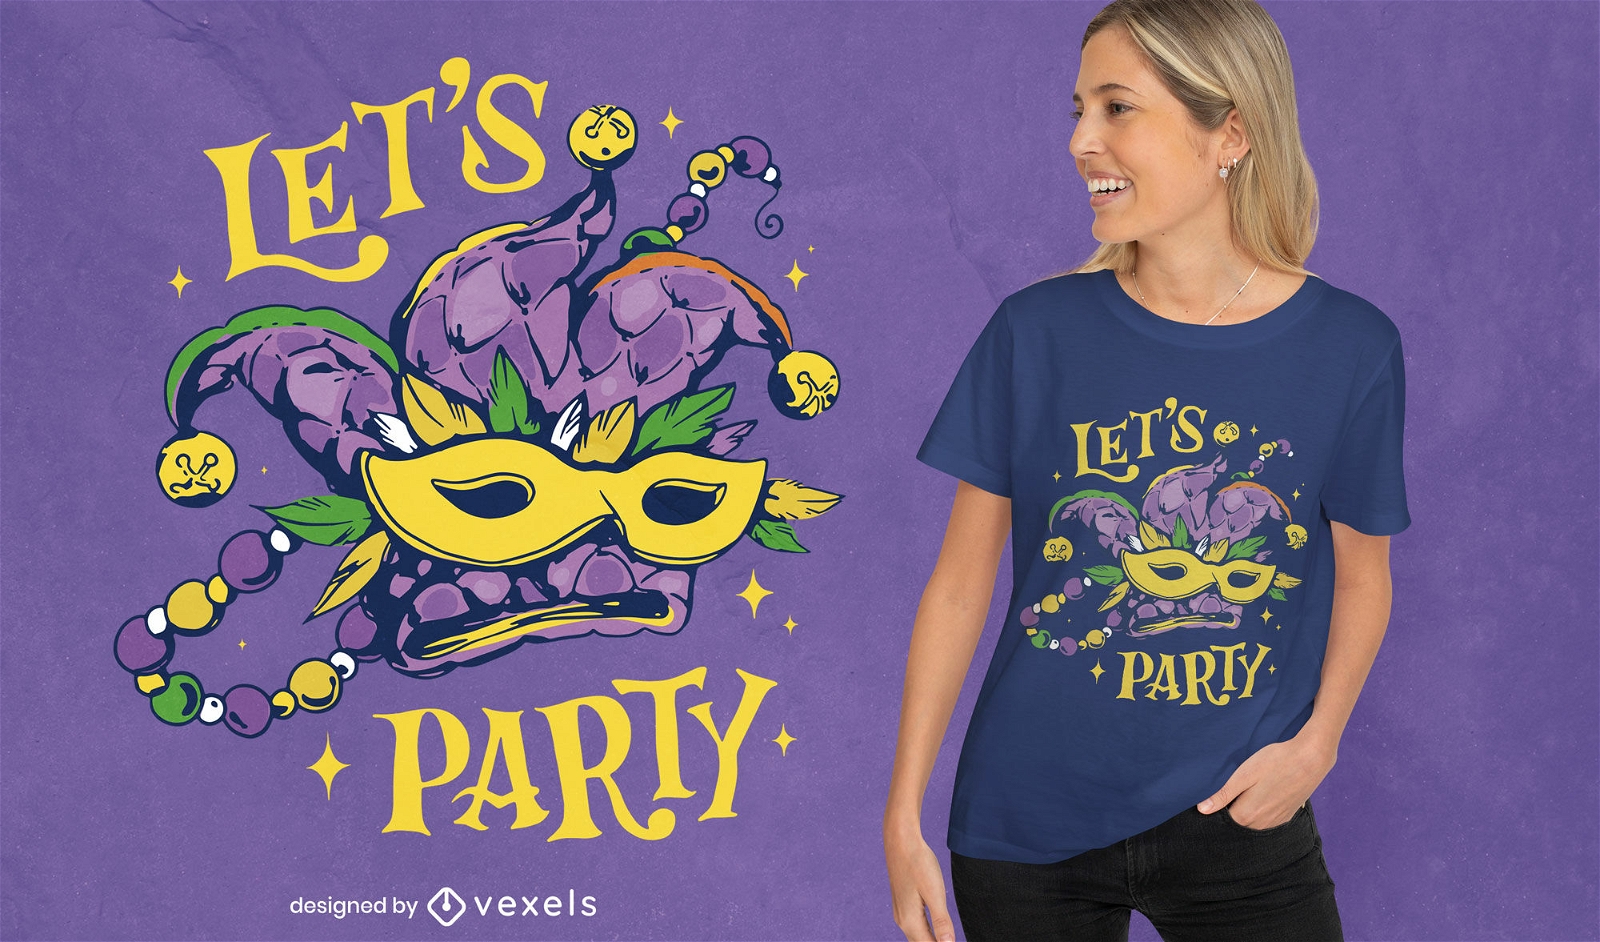 Mardi Gras party quote t-shirt design